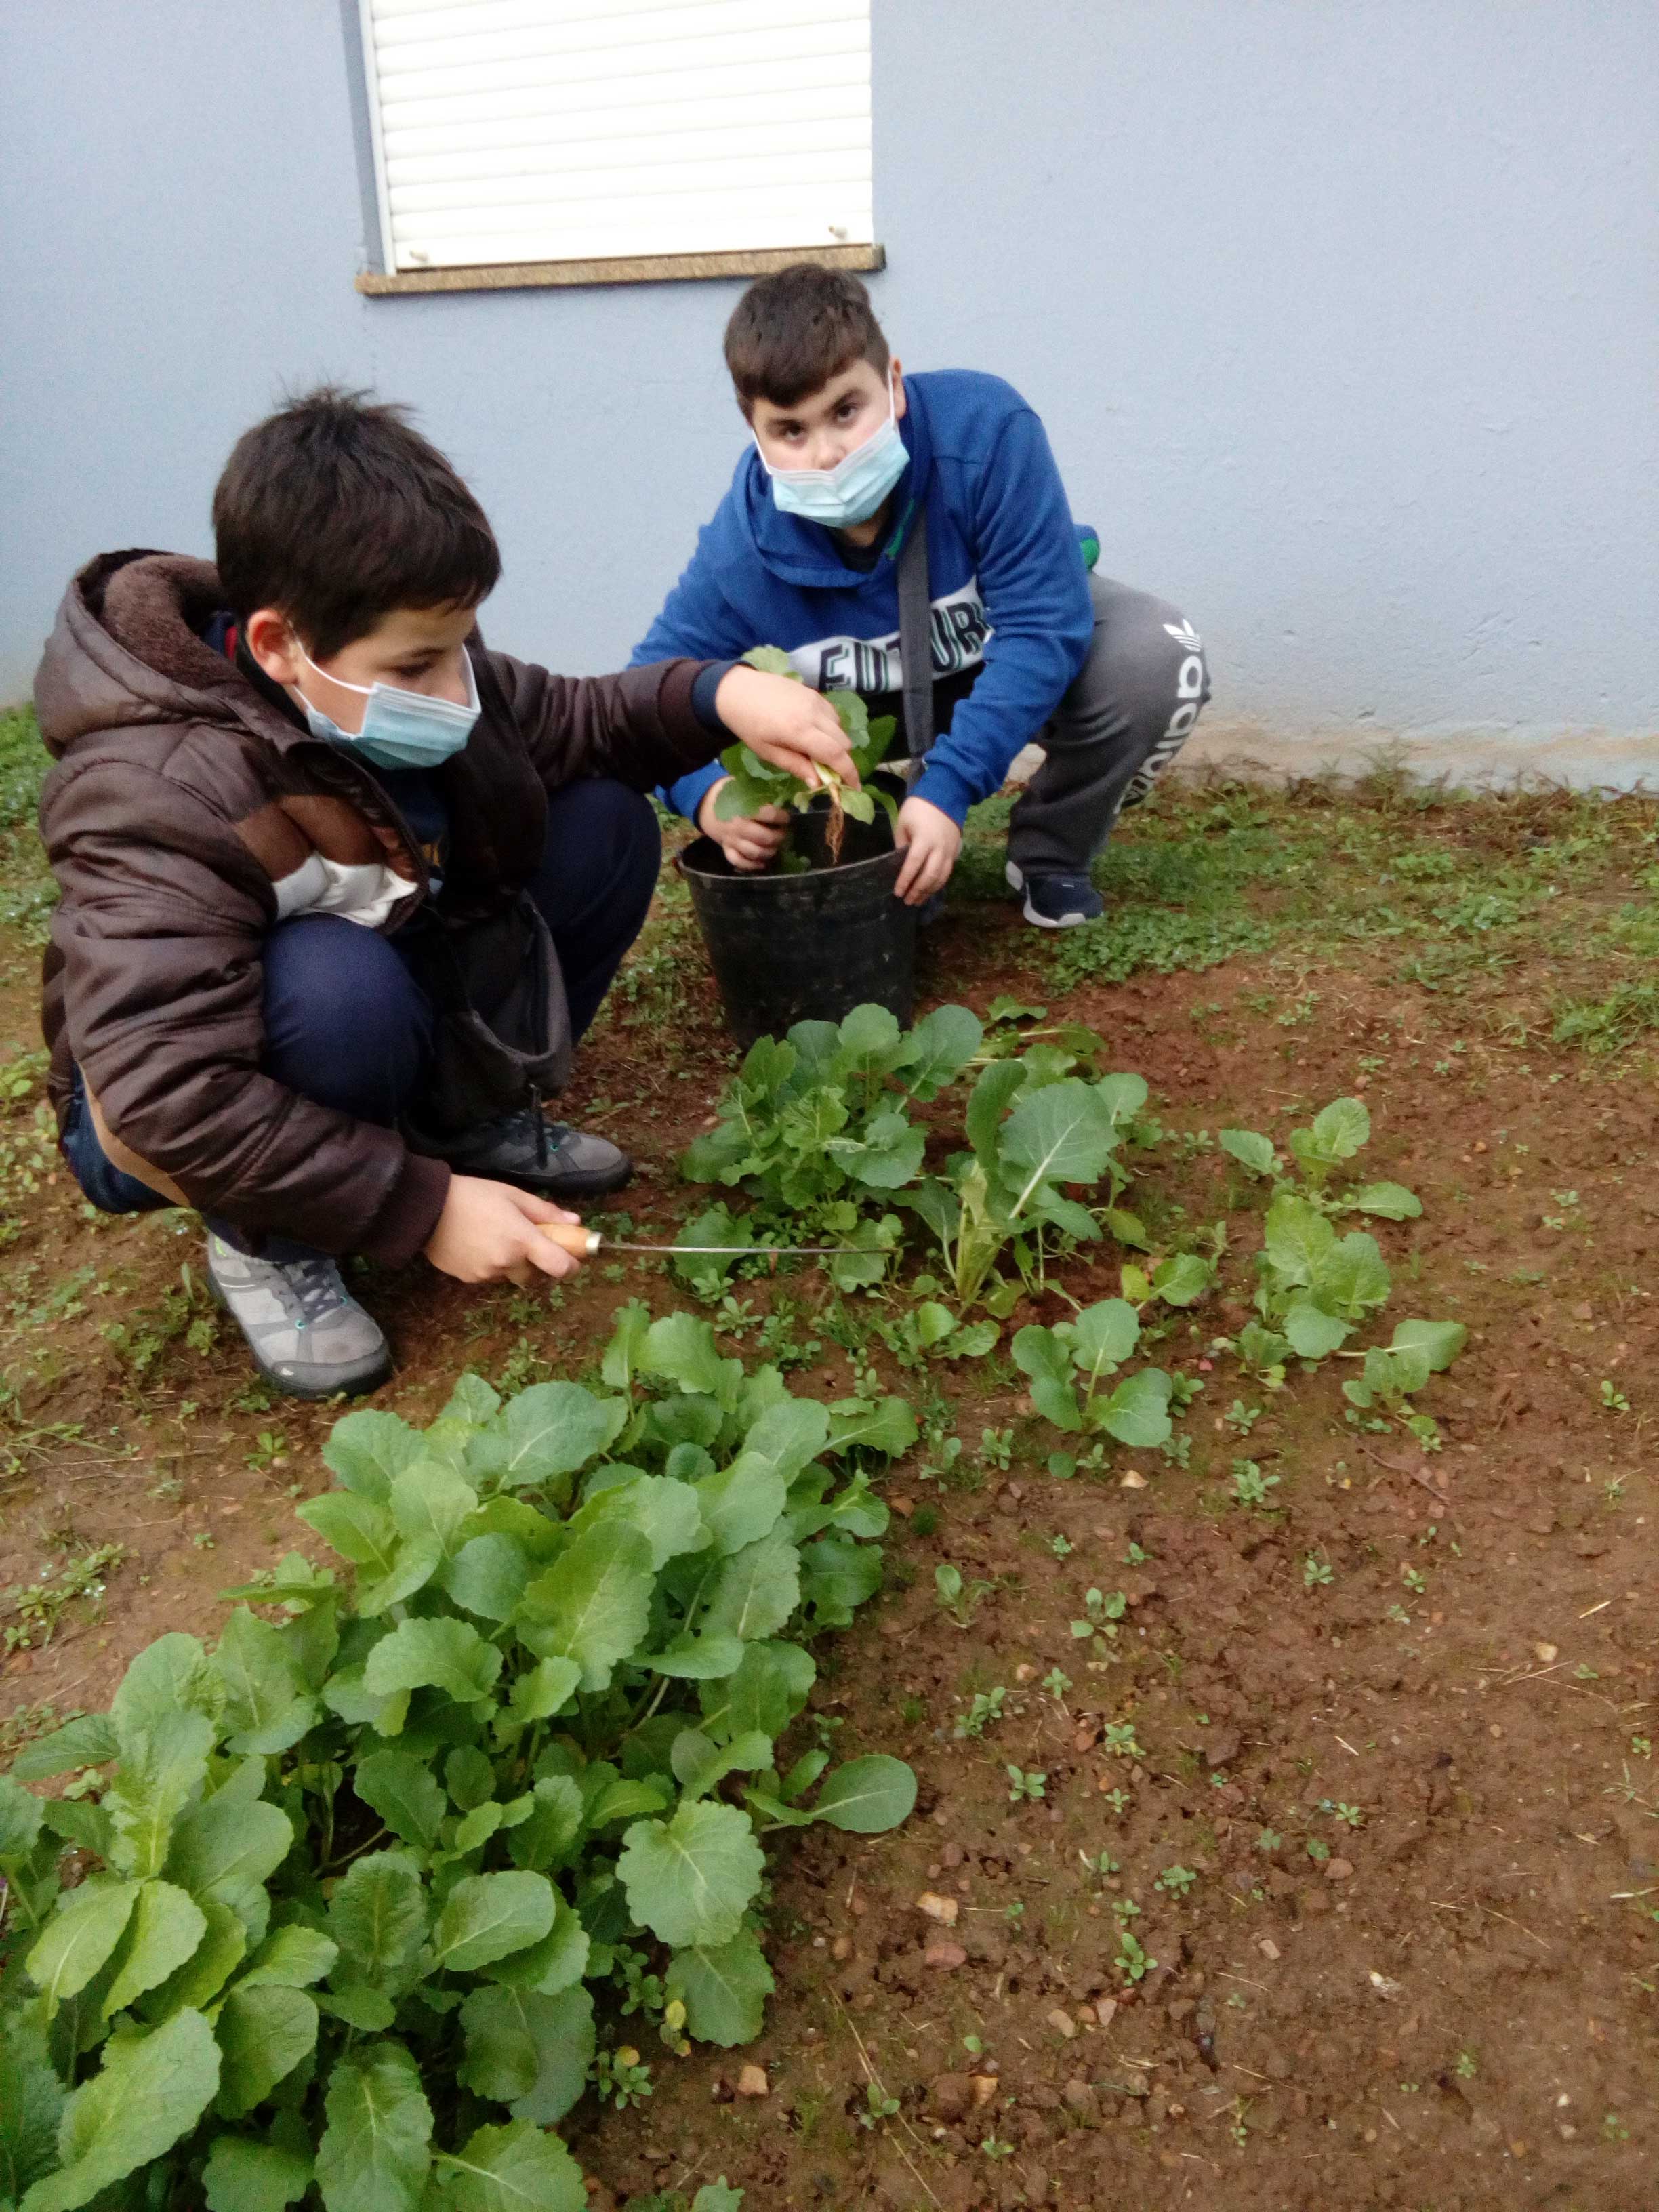 Colheita de legumes - horta exterior. Os alunos fazem a colheita de legumes na horta exterior.